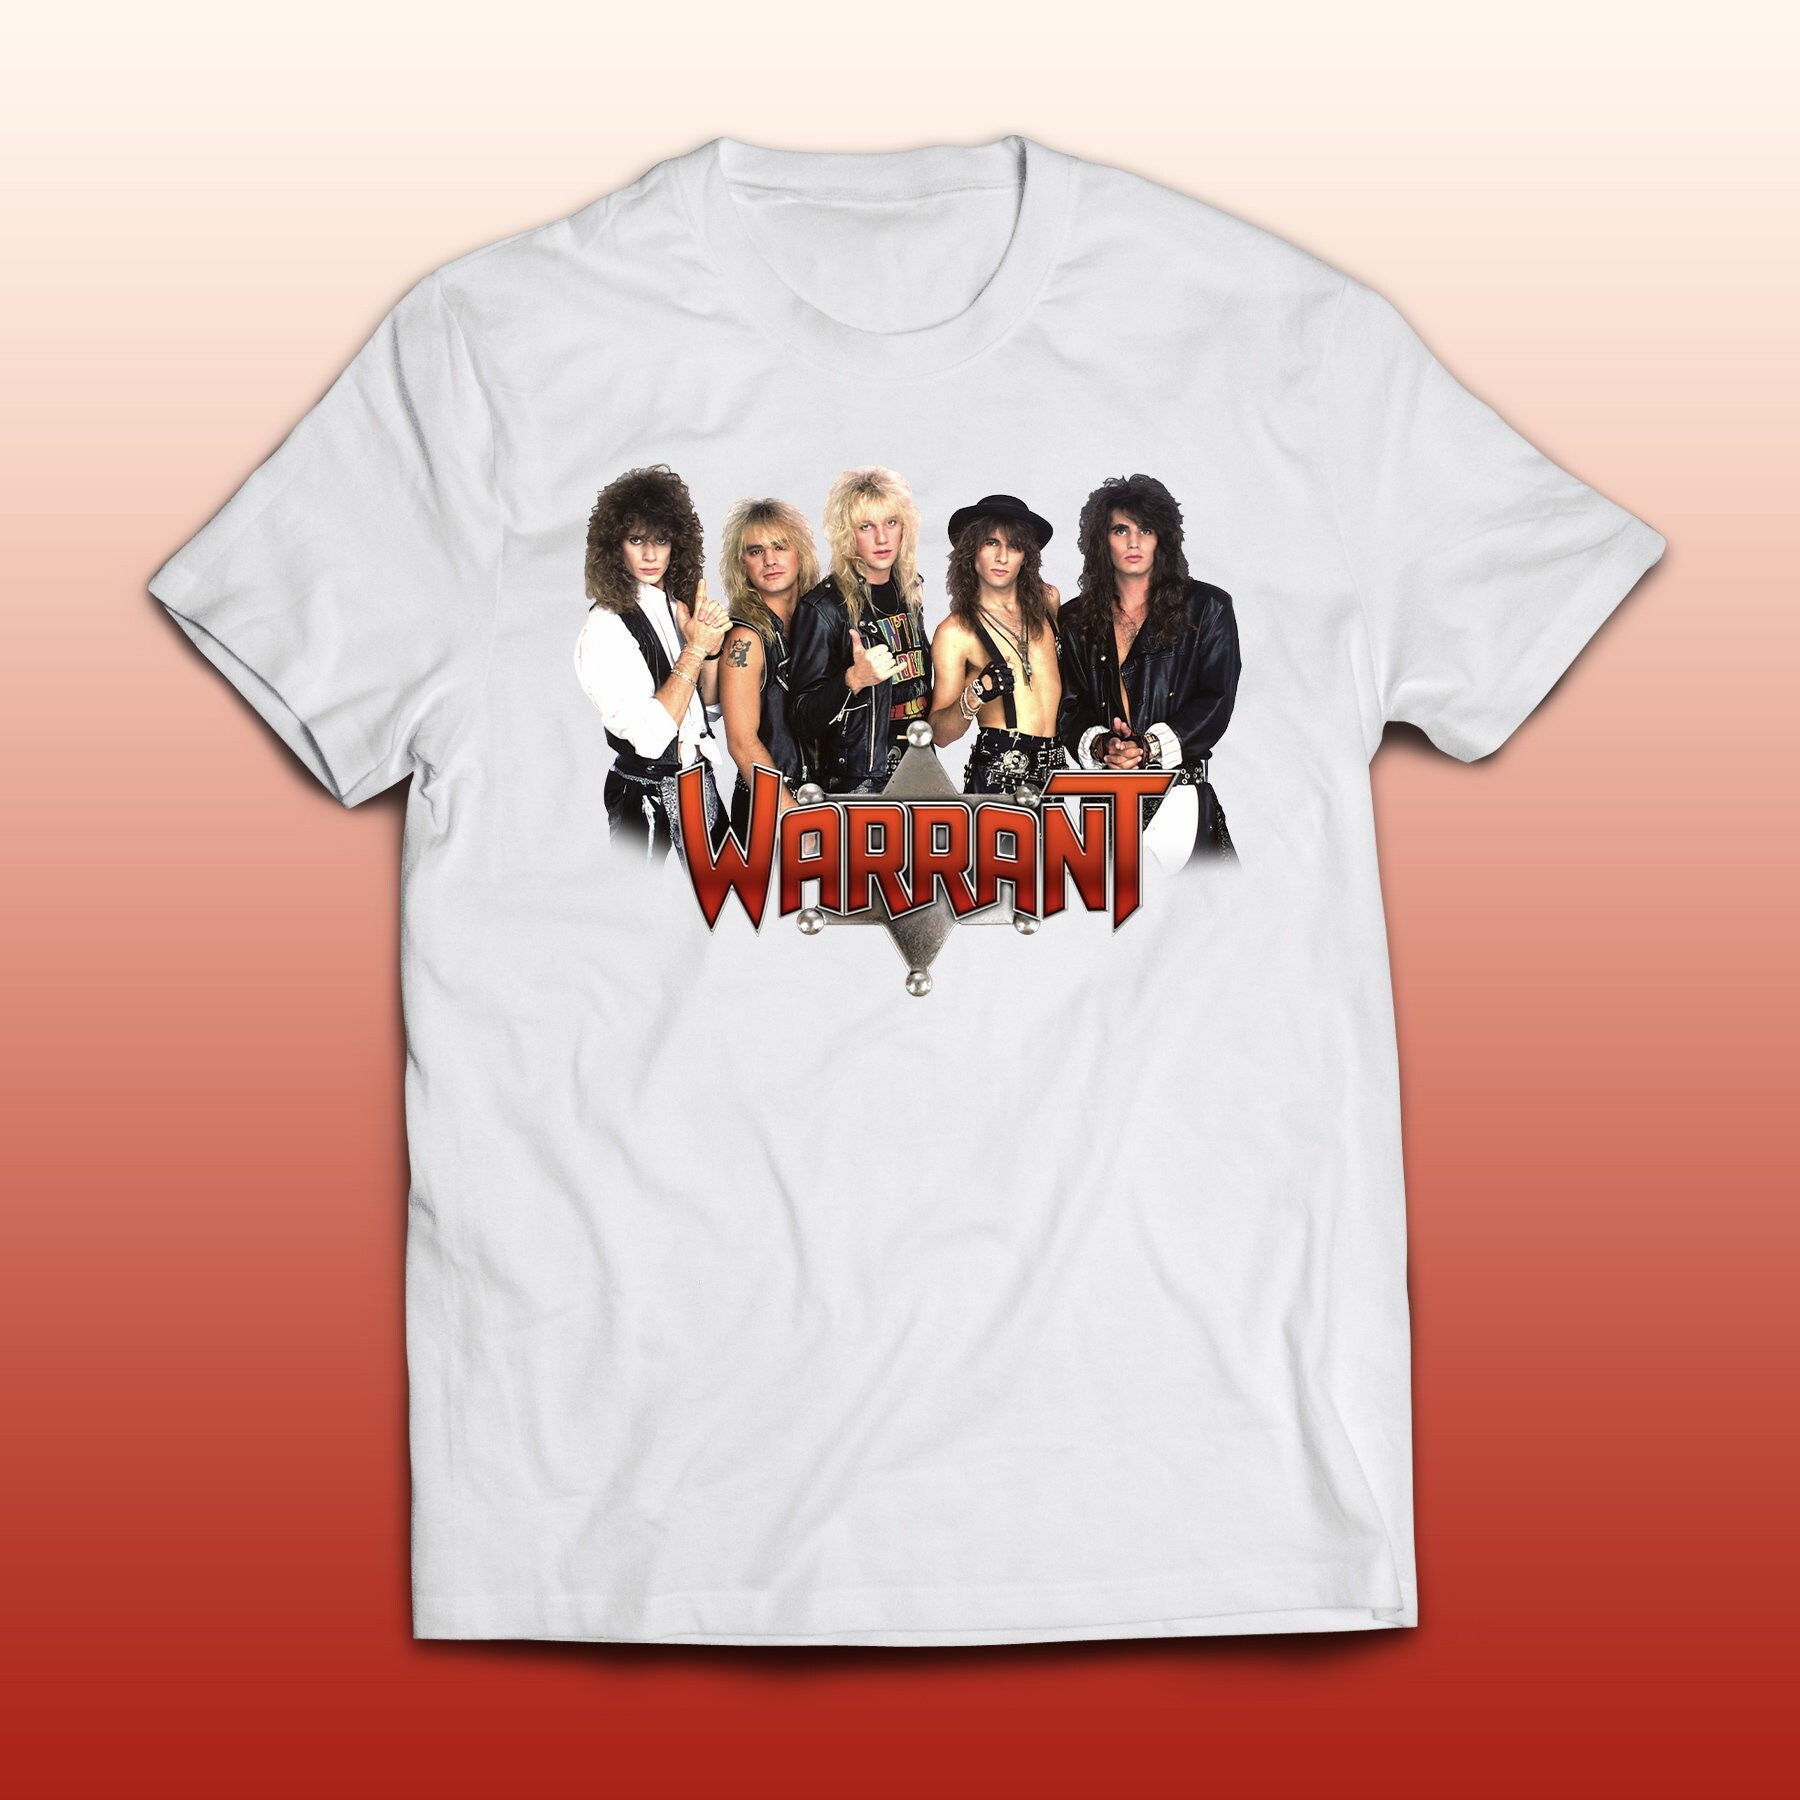 Sizes S to 3XL 80s Music Band Shirt Glam Metal Hard Rock| Vintage Retro Black or White Warrant Shirt 100% Cotton